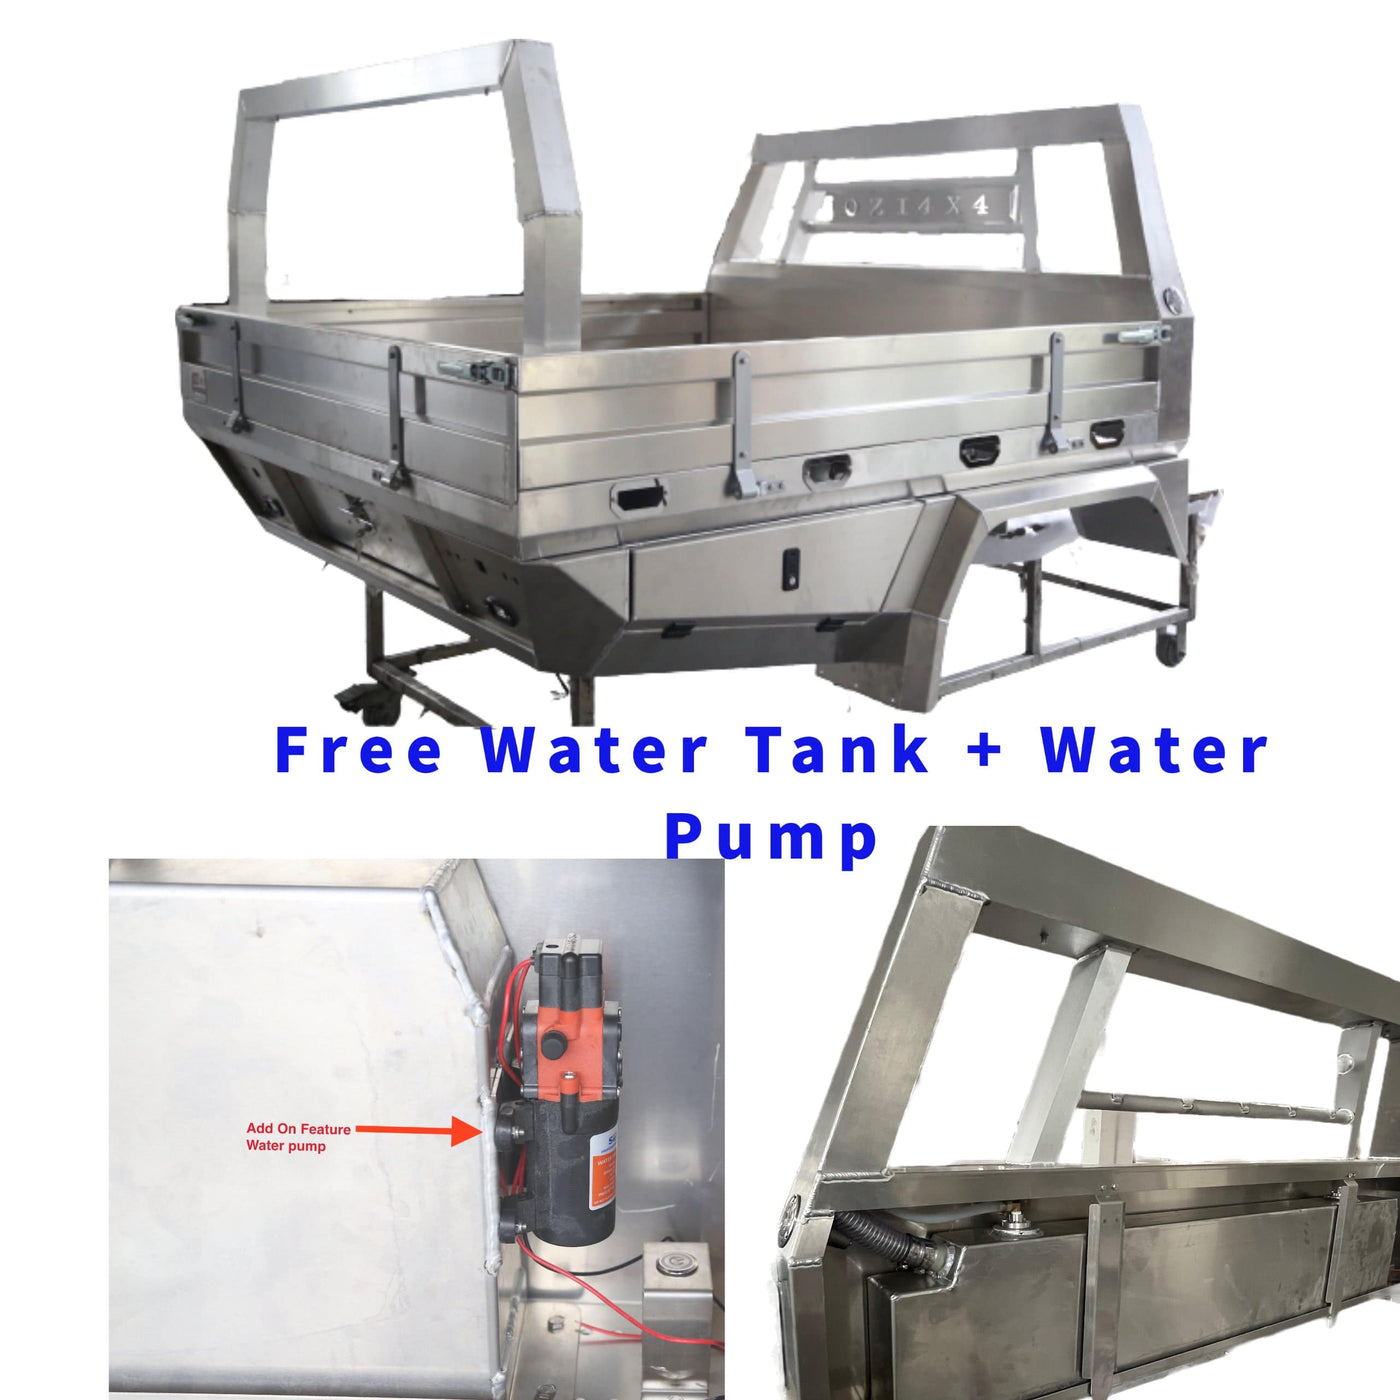 🔥 Premium Raw 1900 Aluminium Tray + Free Water Tank + Free Water Pump Just Arrived 🔥